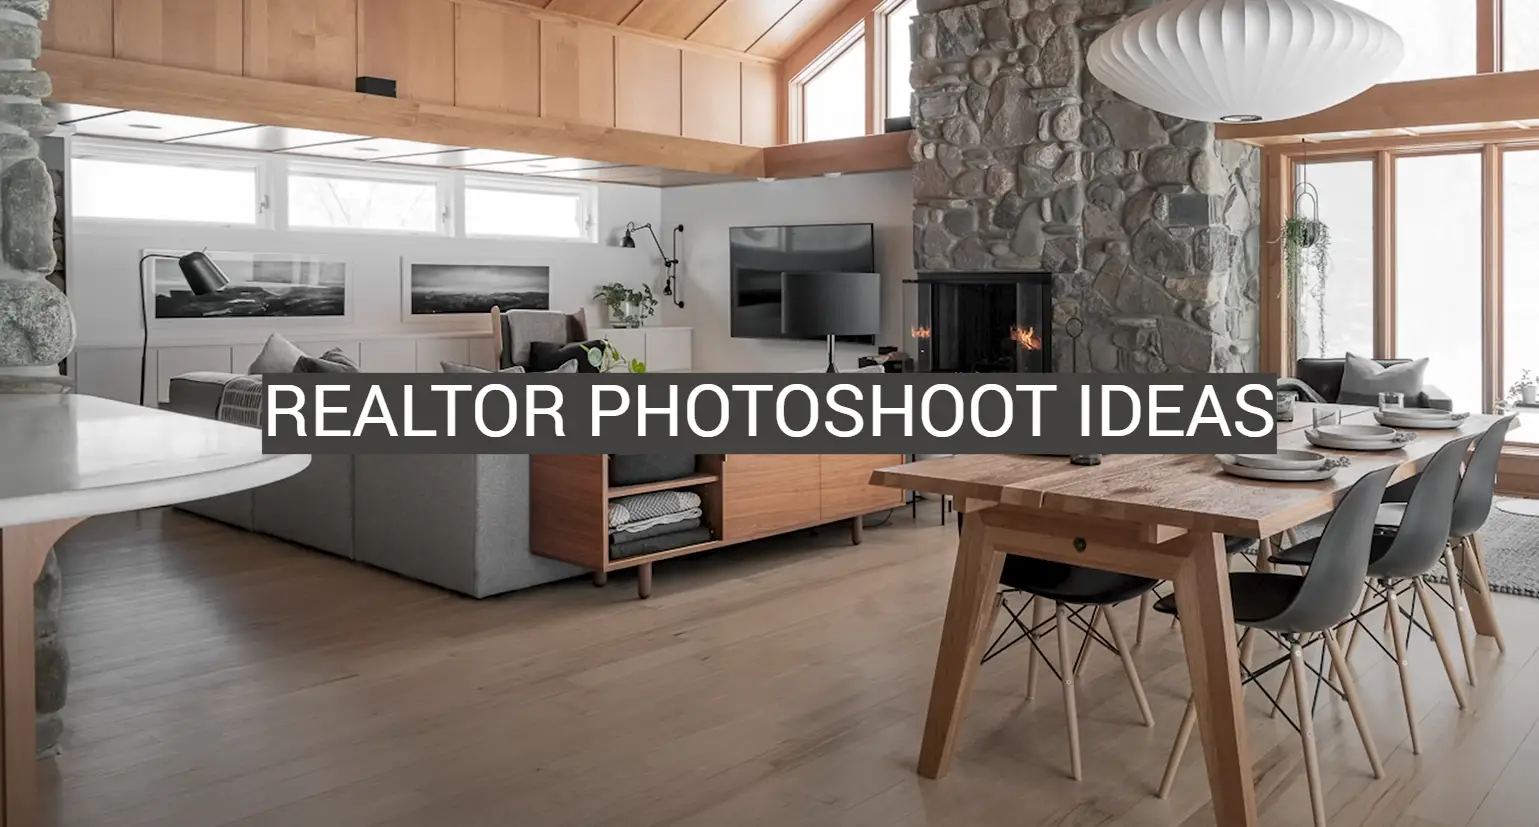 Realtor Photoshoot Ideas